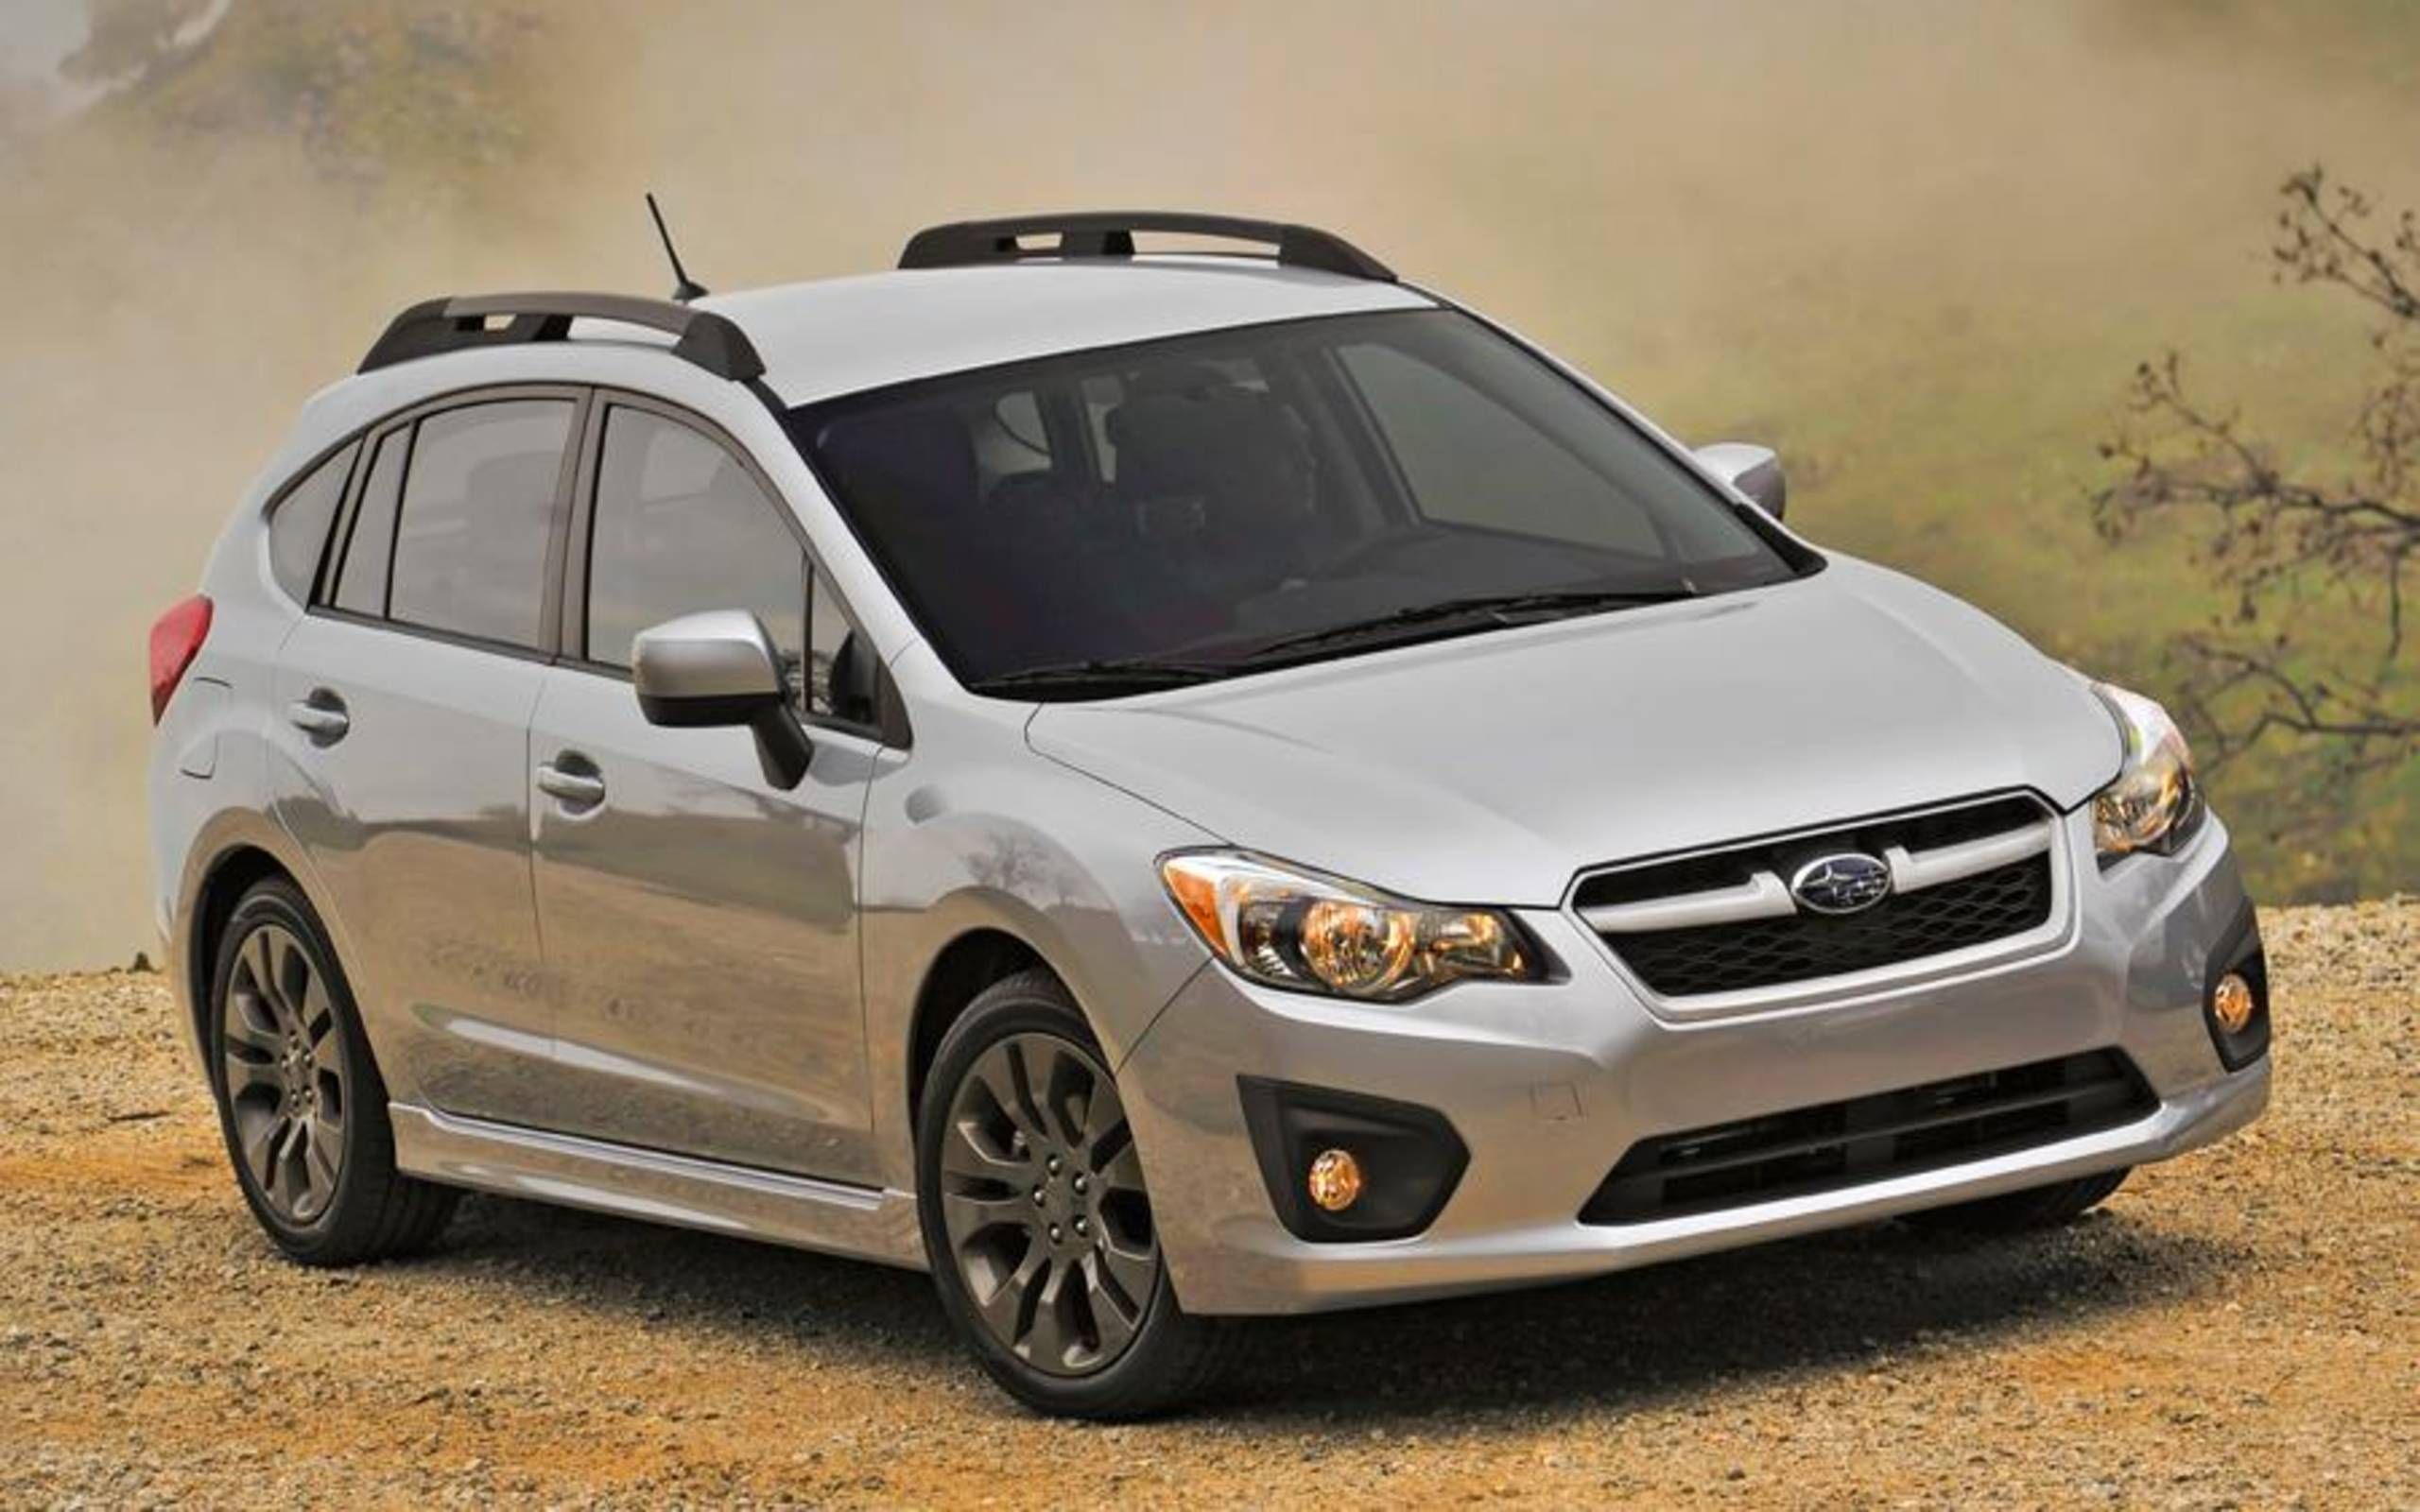 2012 Subaru Impreza 2.0i Sport Limited: Review notes: We like the